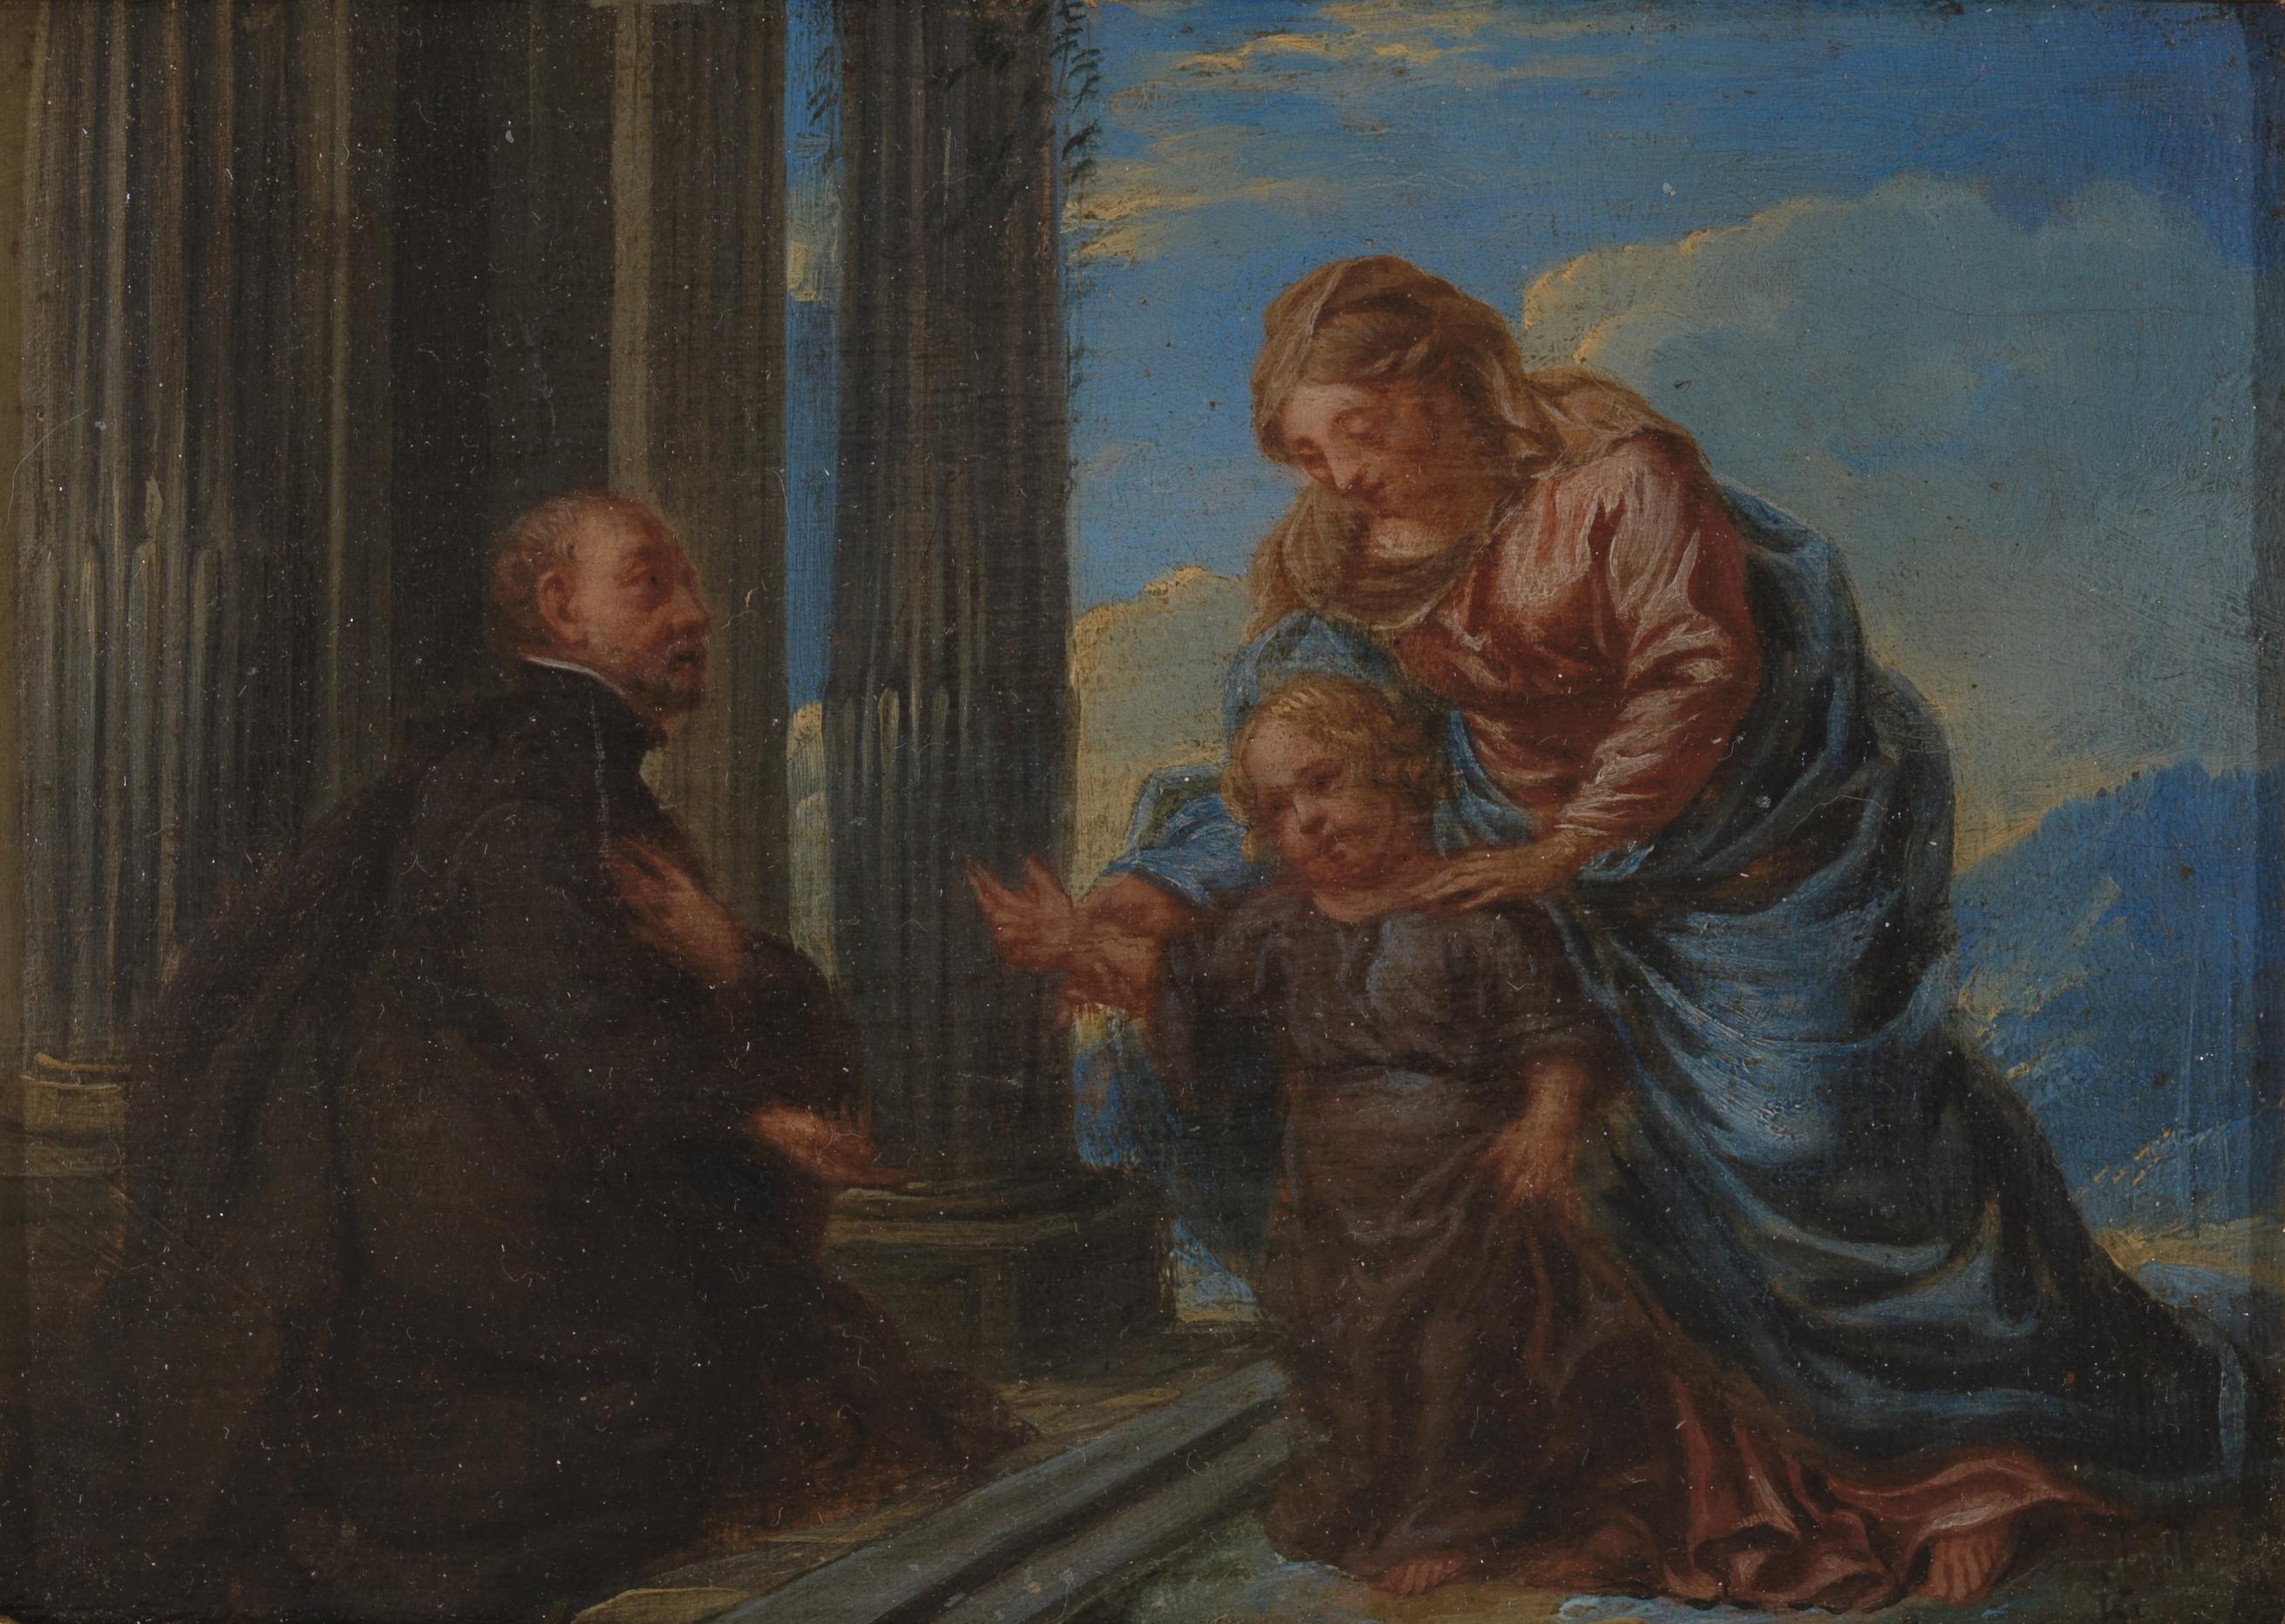 Unknown Figurative Painting - 17th C, Baroque, Saint, Flemish School (monogram IG or LG), St. Francis Xavier